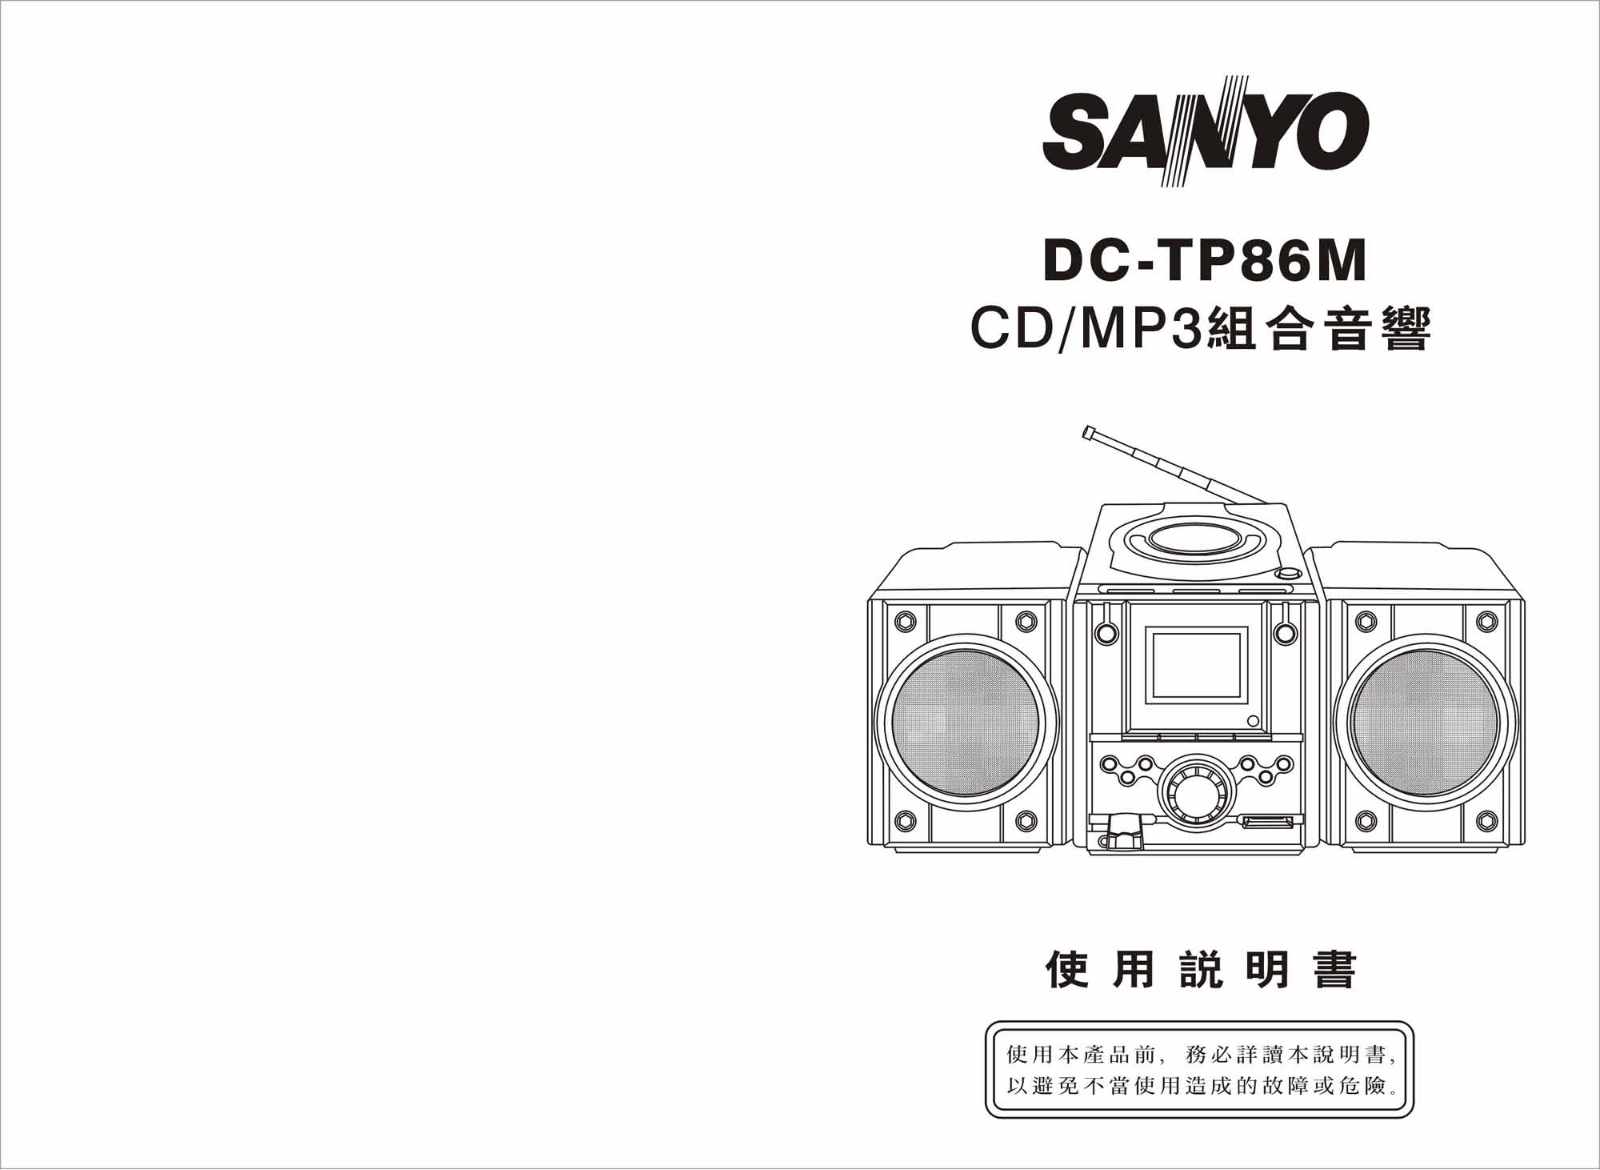 Sanyo DC-TP86M Owner's Manual